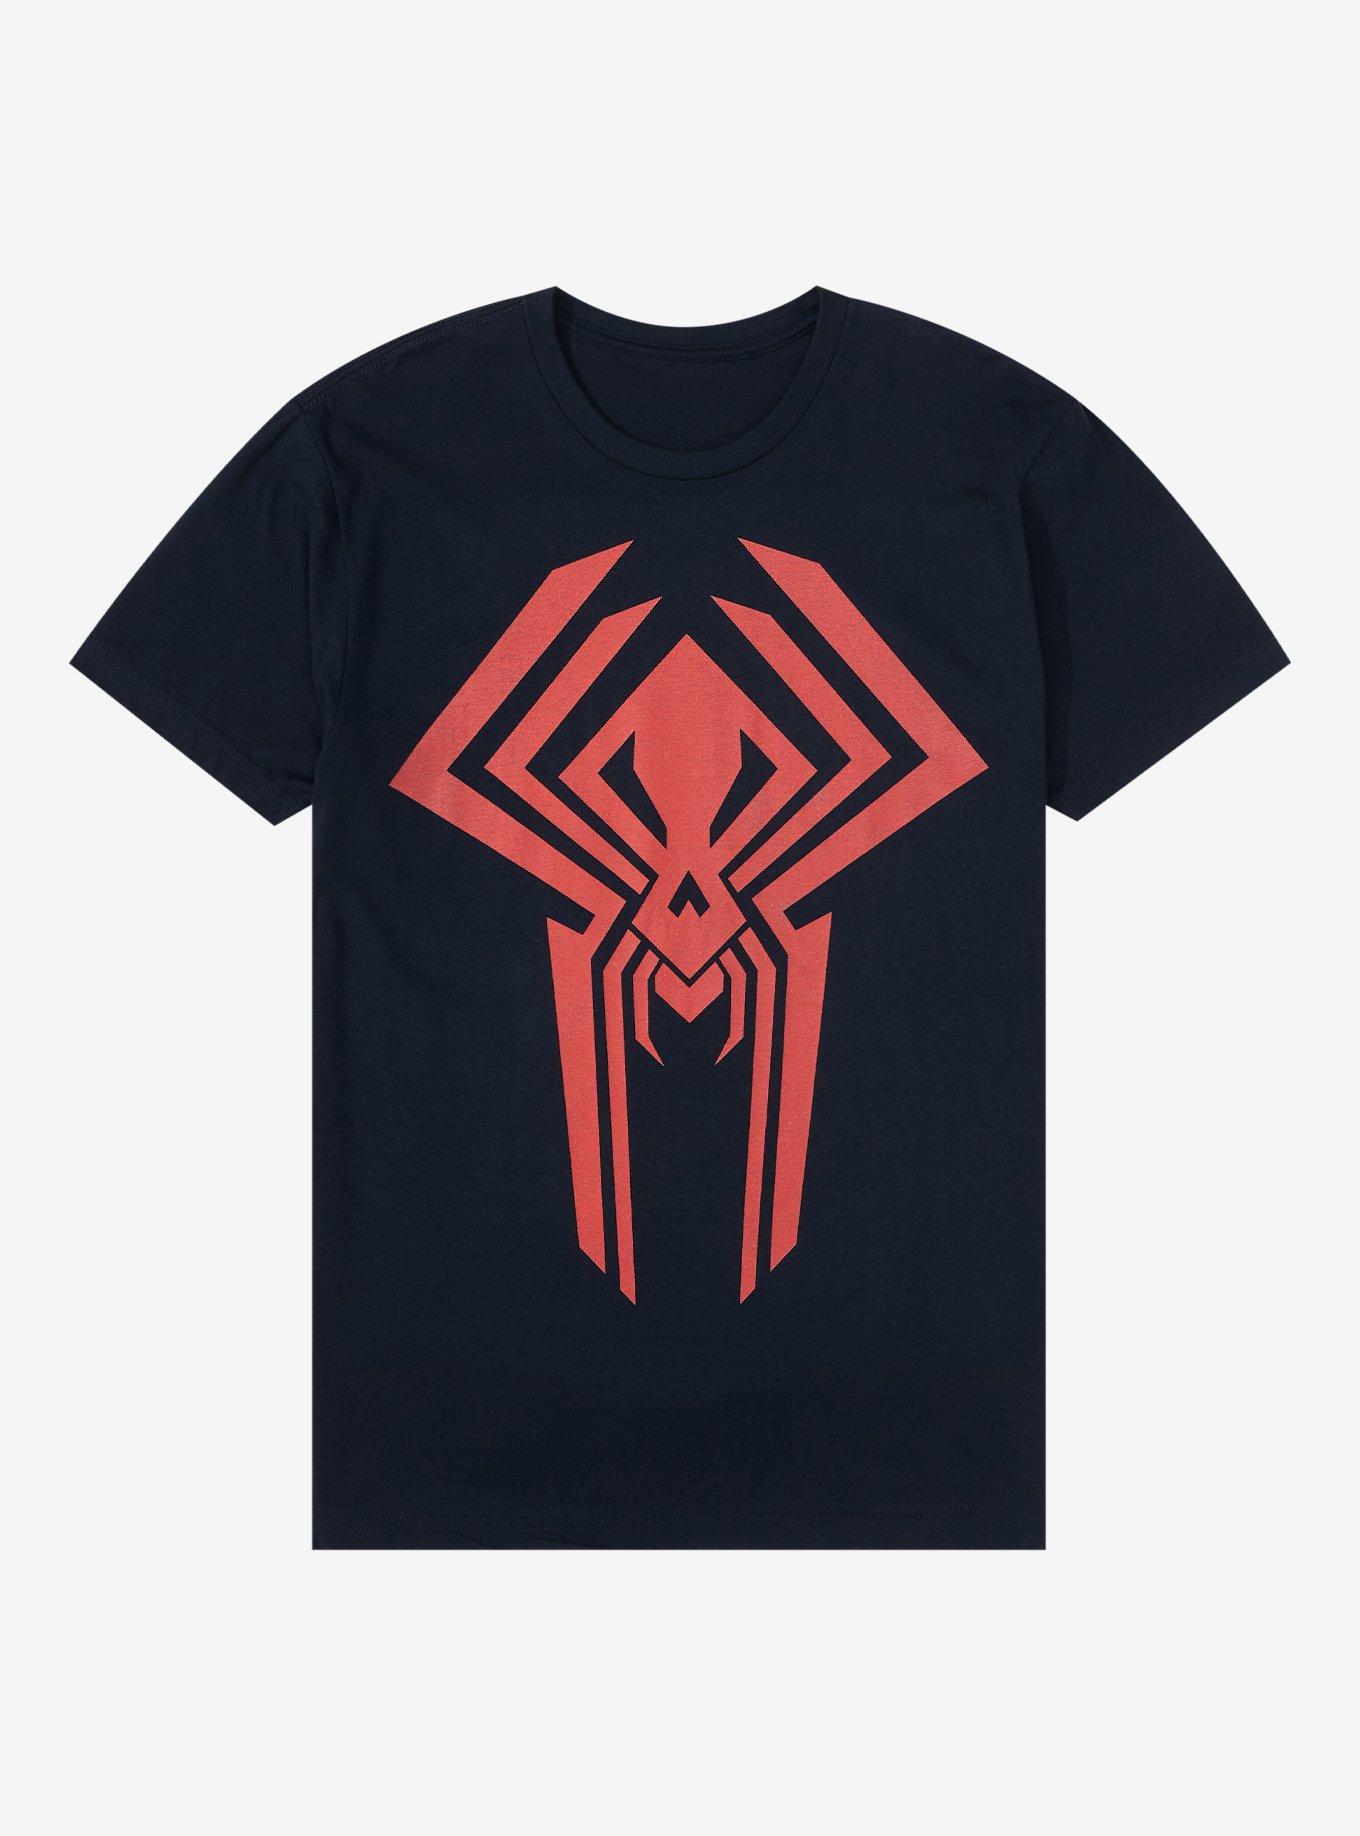 Spider-Man: Topic | Hot T-Shirt Spider-Man Across Logo Spider-Verse Marvel 2099 The